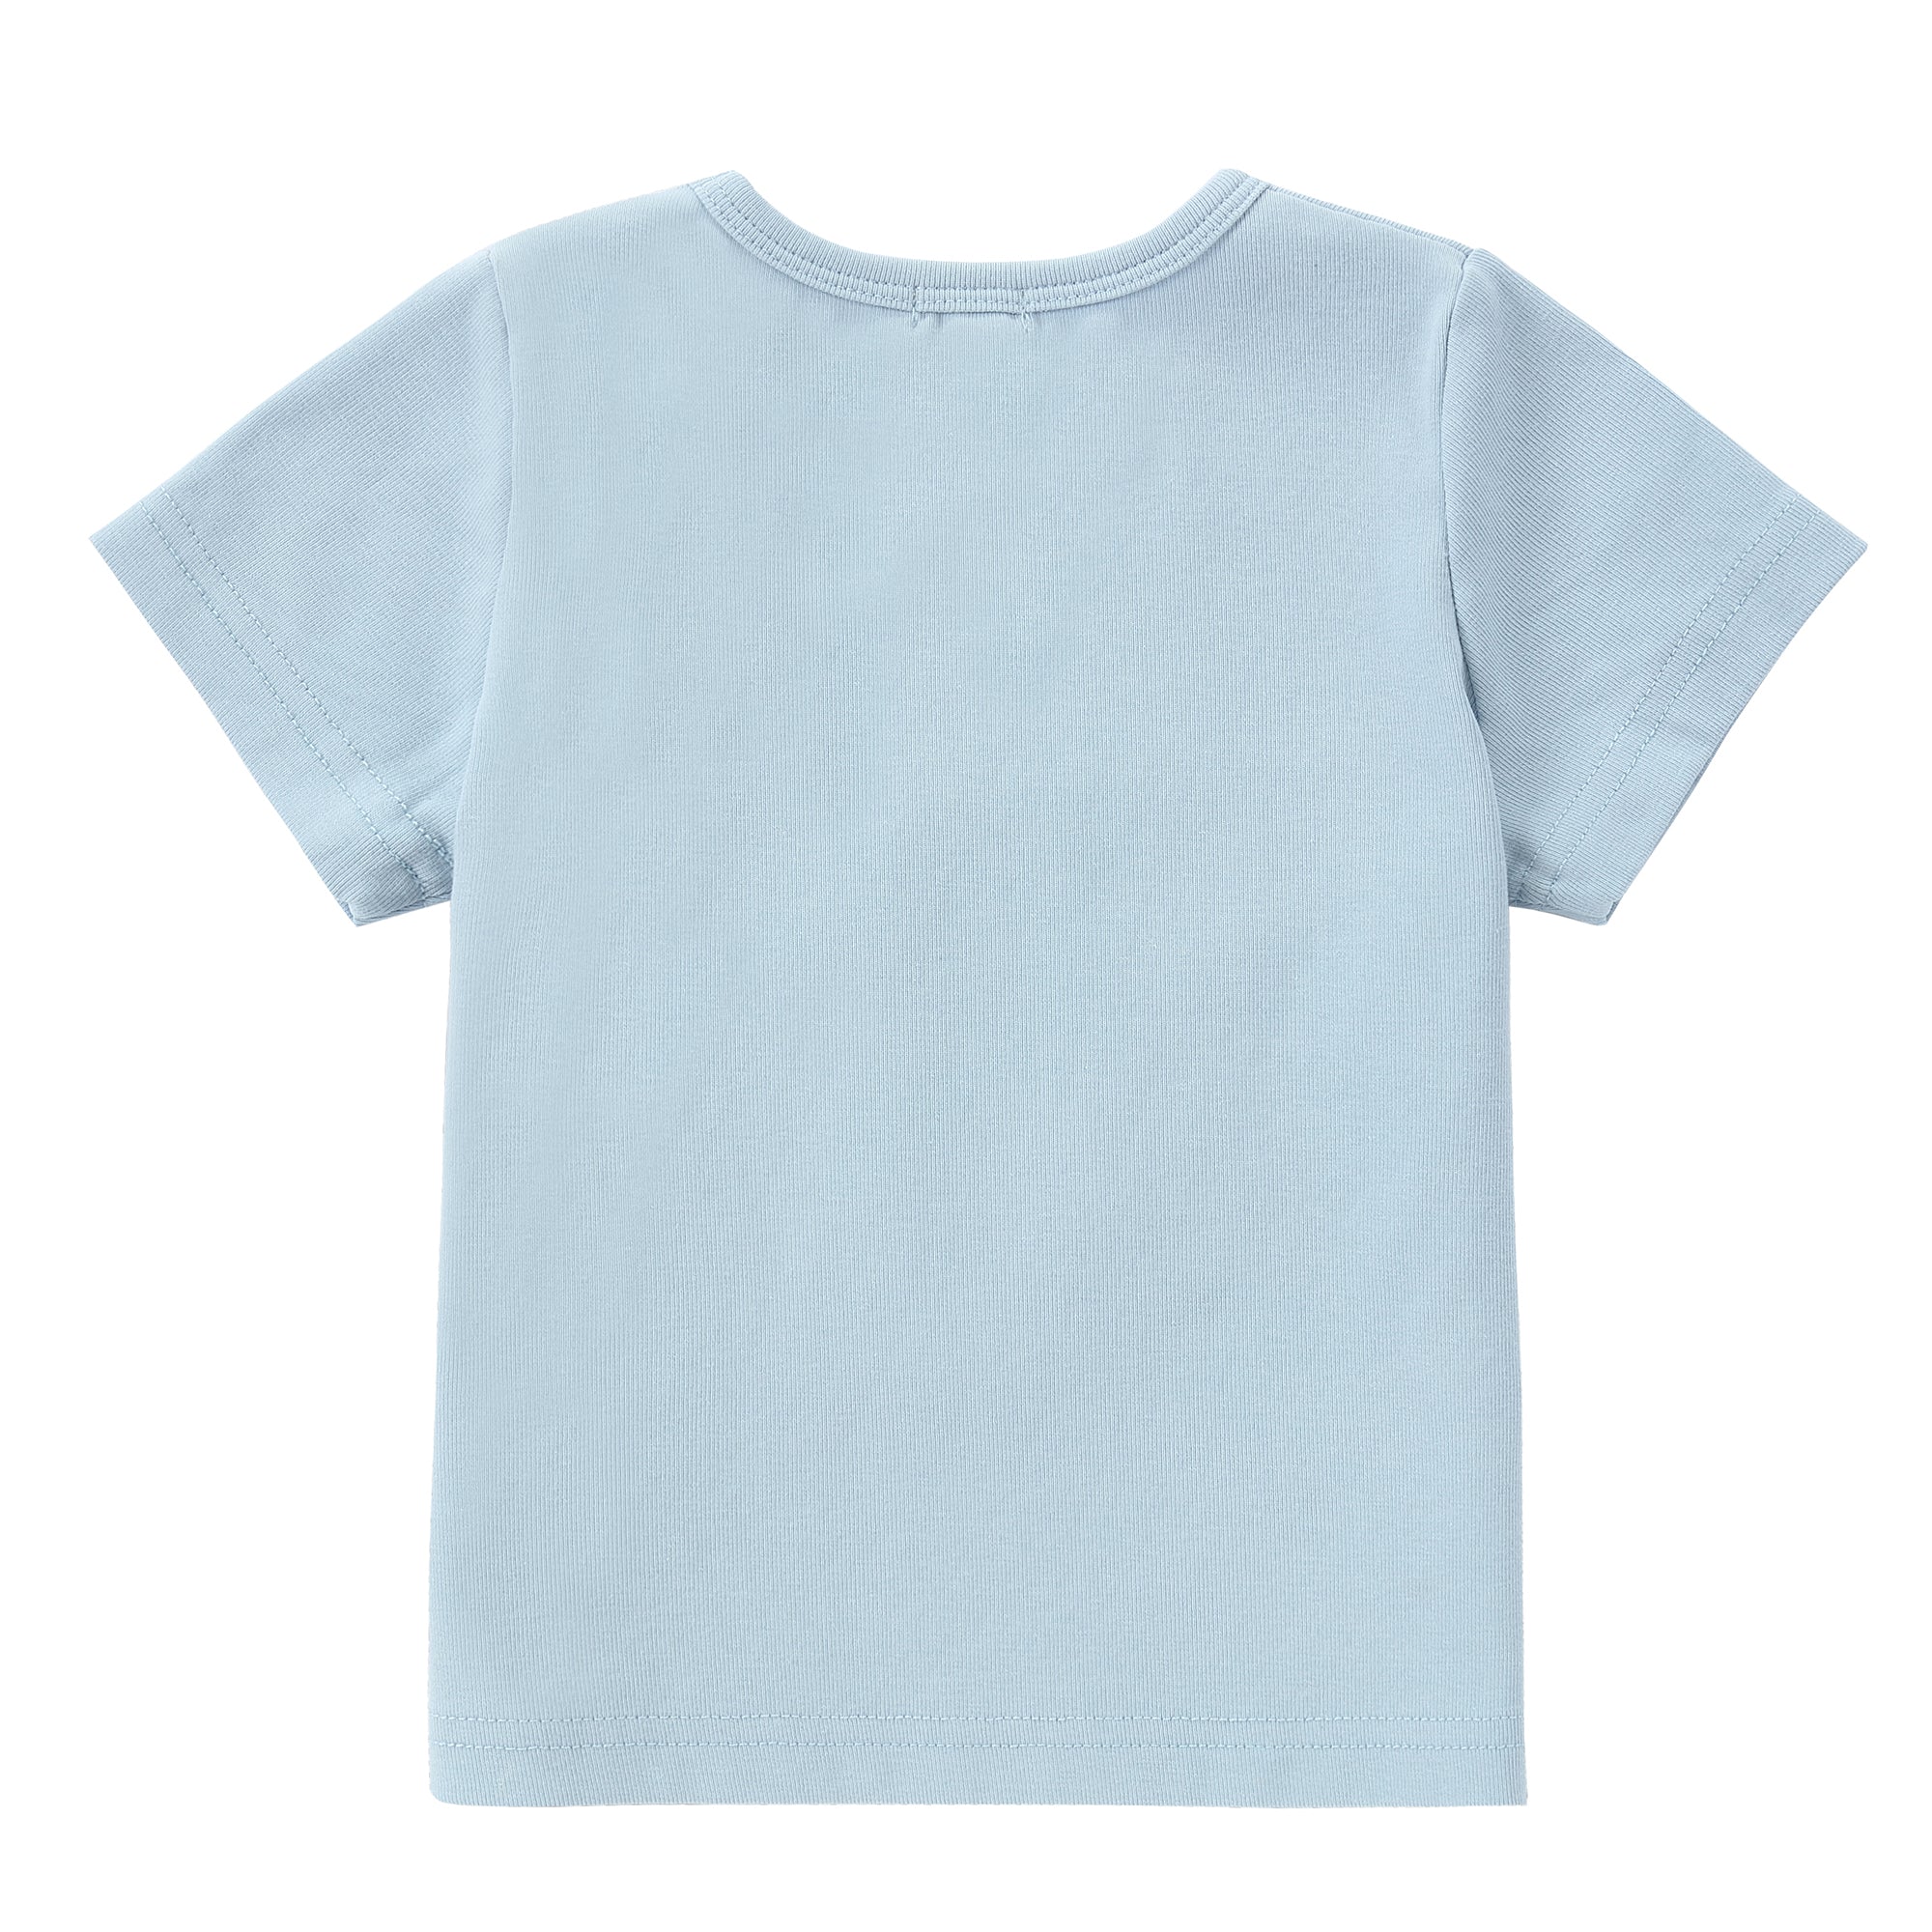 Light Blue T-Shirt With Denim Anchor Applique